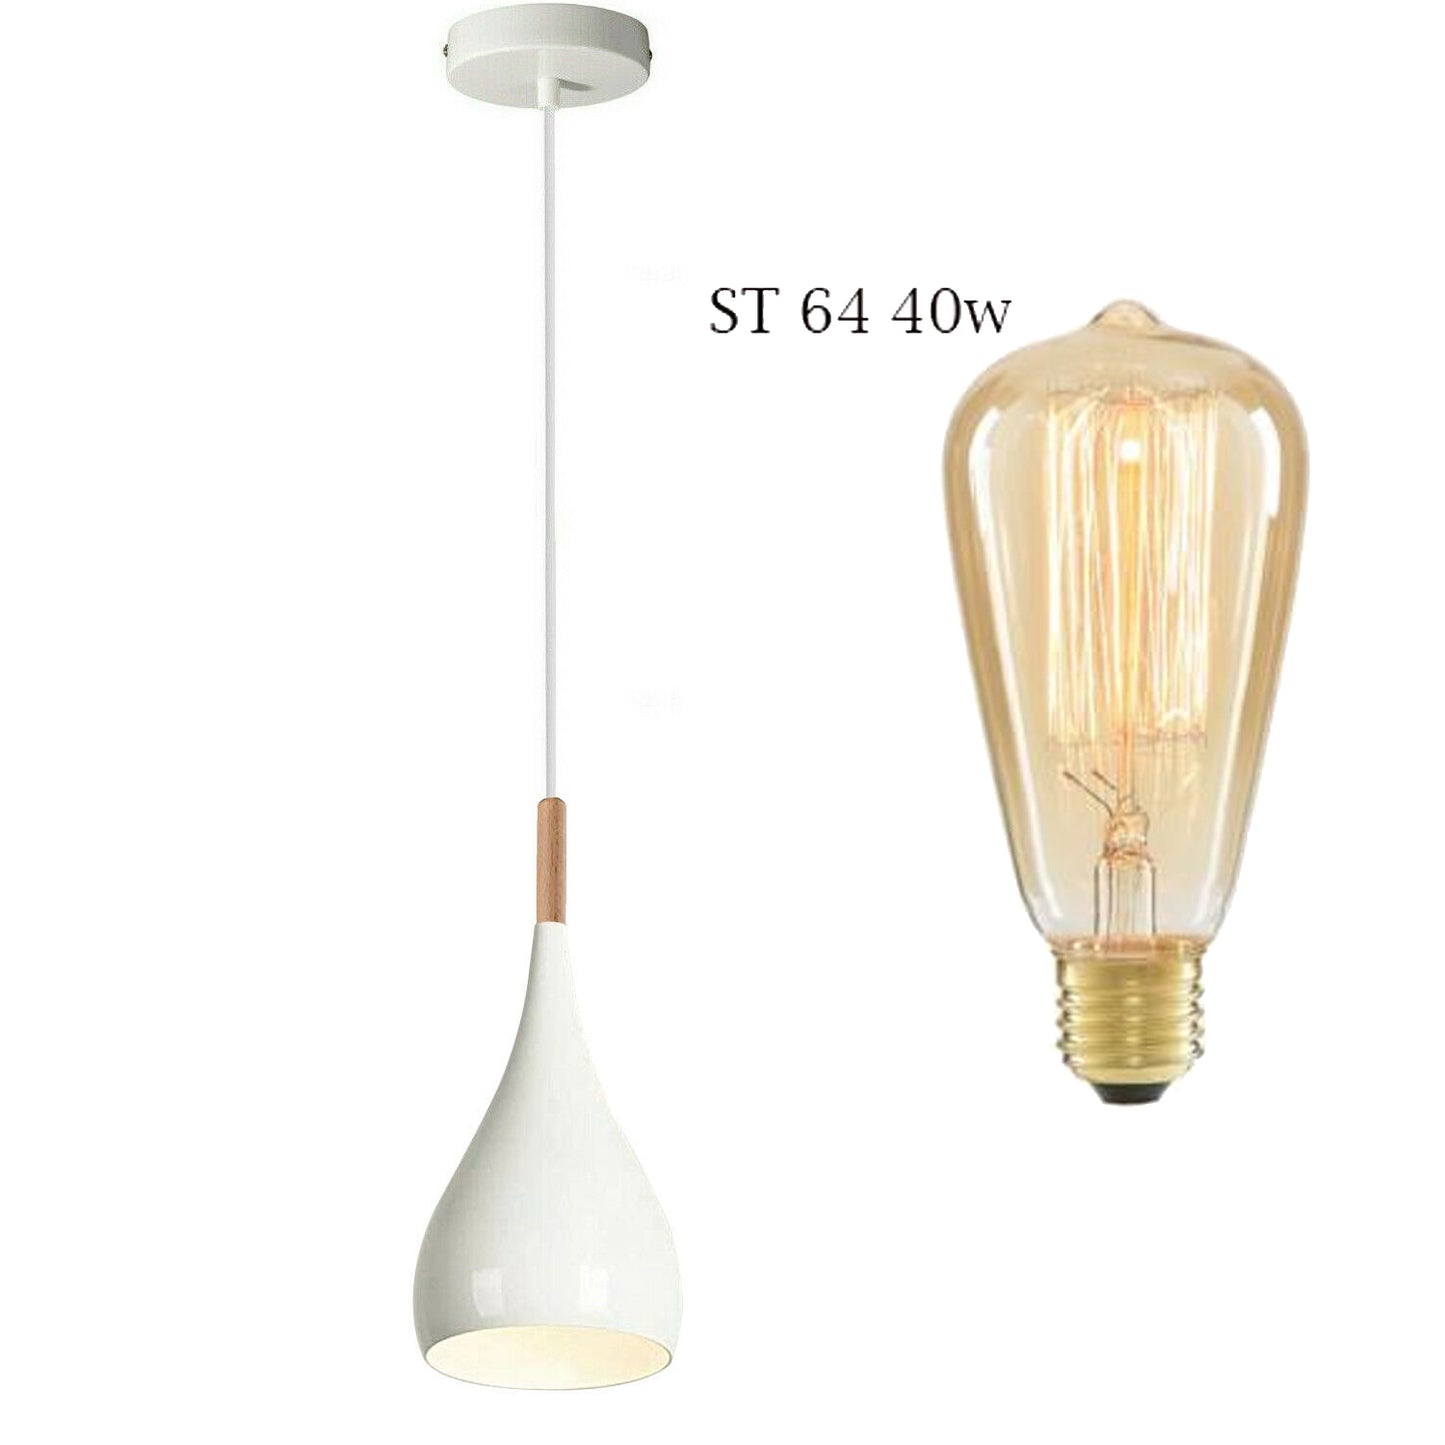 Vintage Industrial New Metal Ceiling Lamp Shade Pendant Light  ~3536